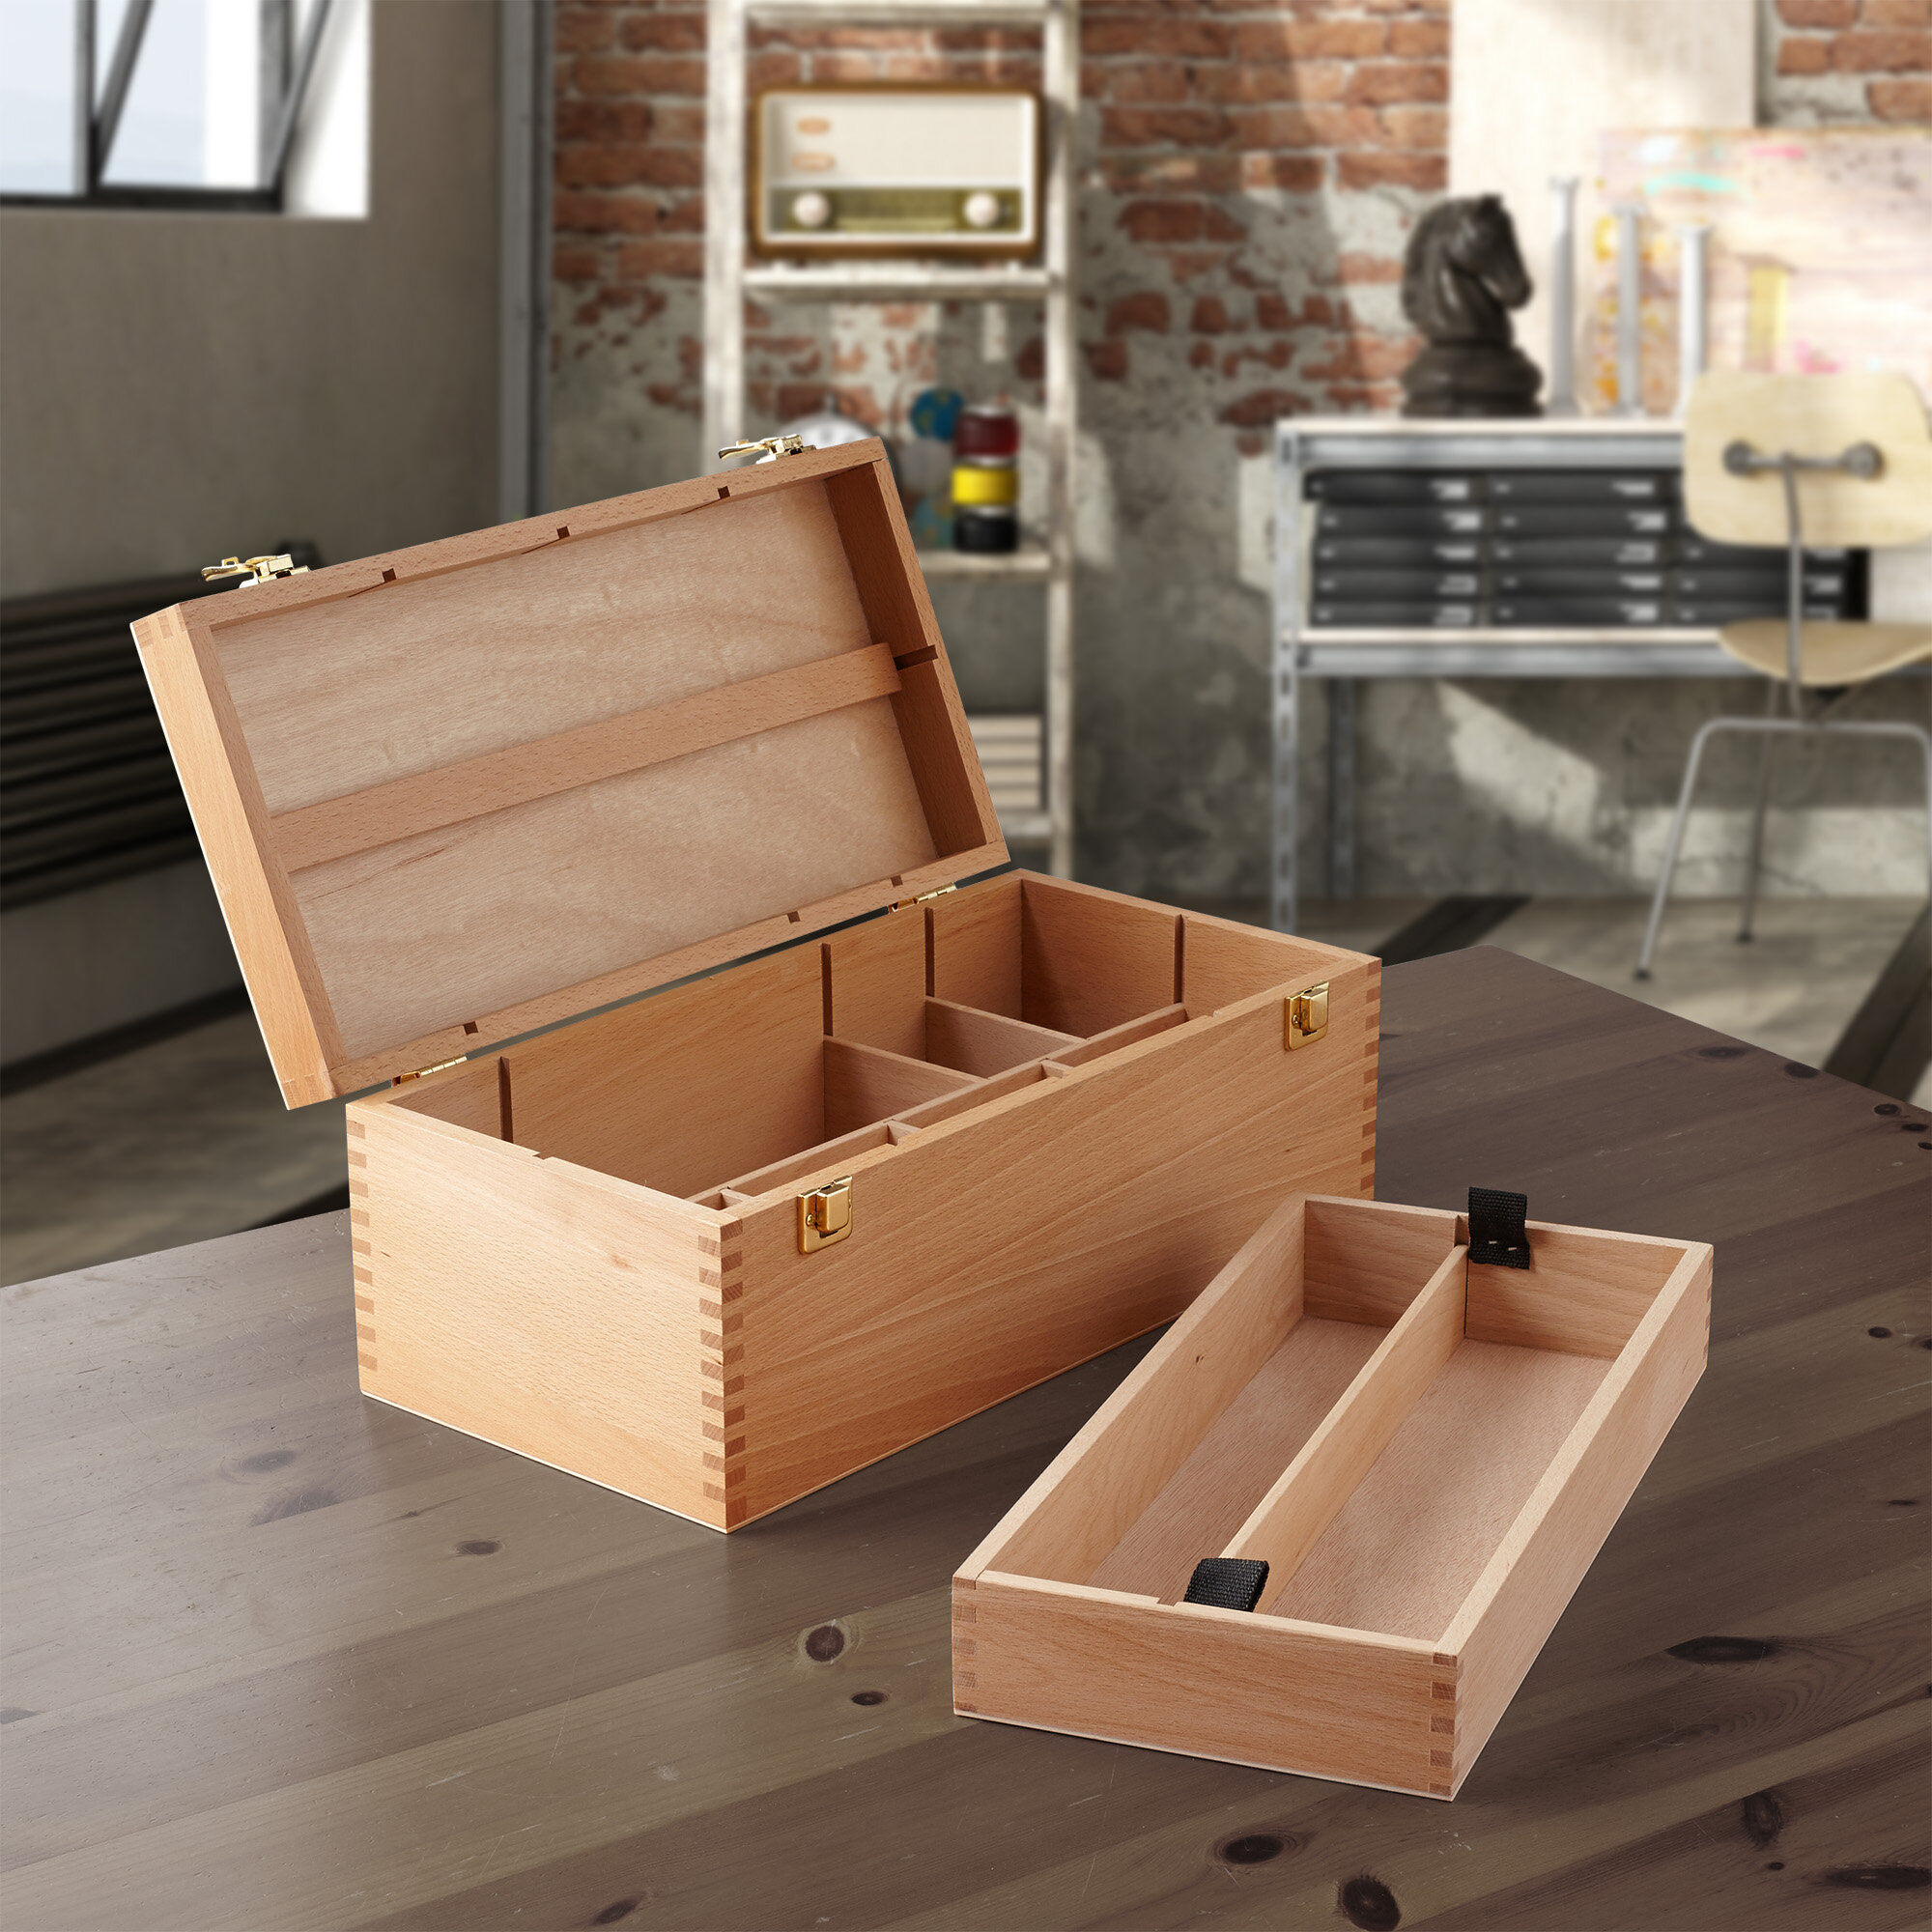 ArtBin Essentials Lift-Out Tray, Art and Craft Storage Box – Big